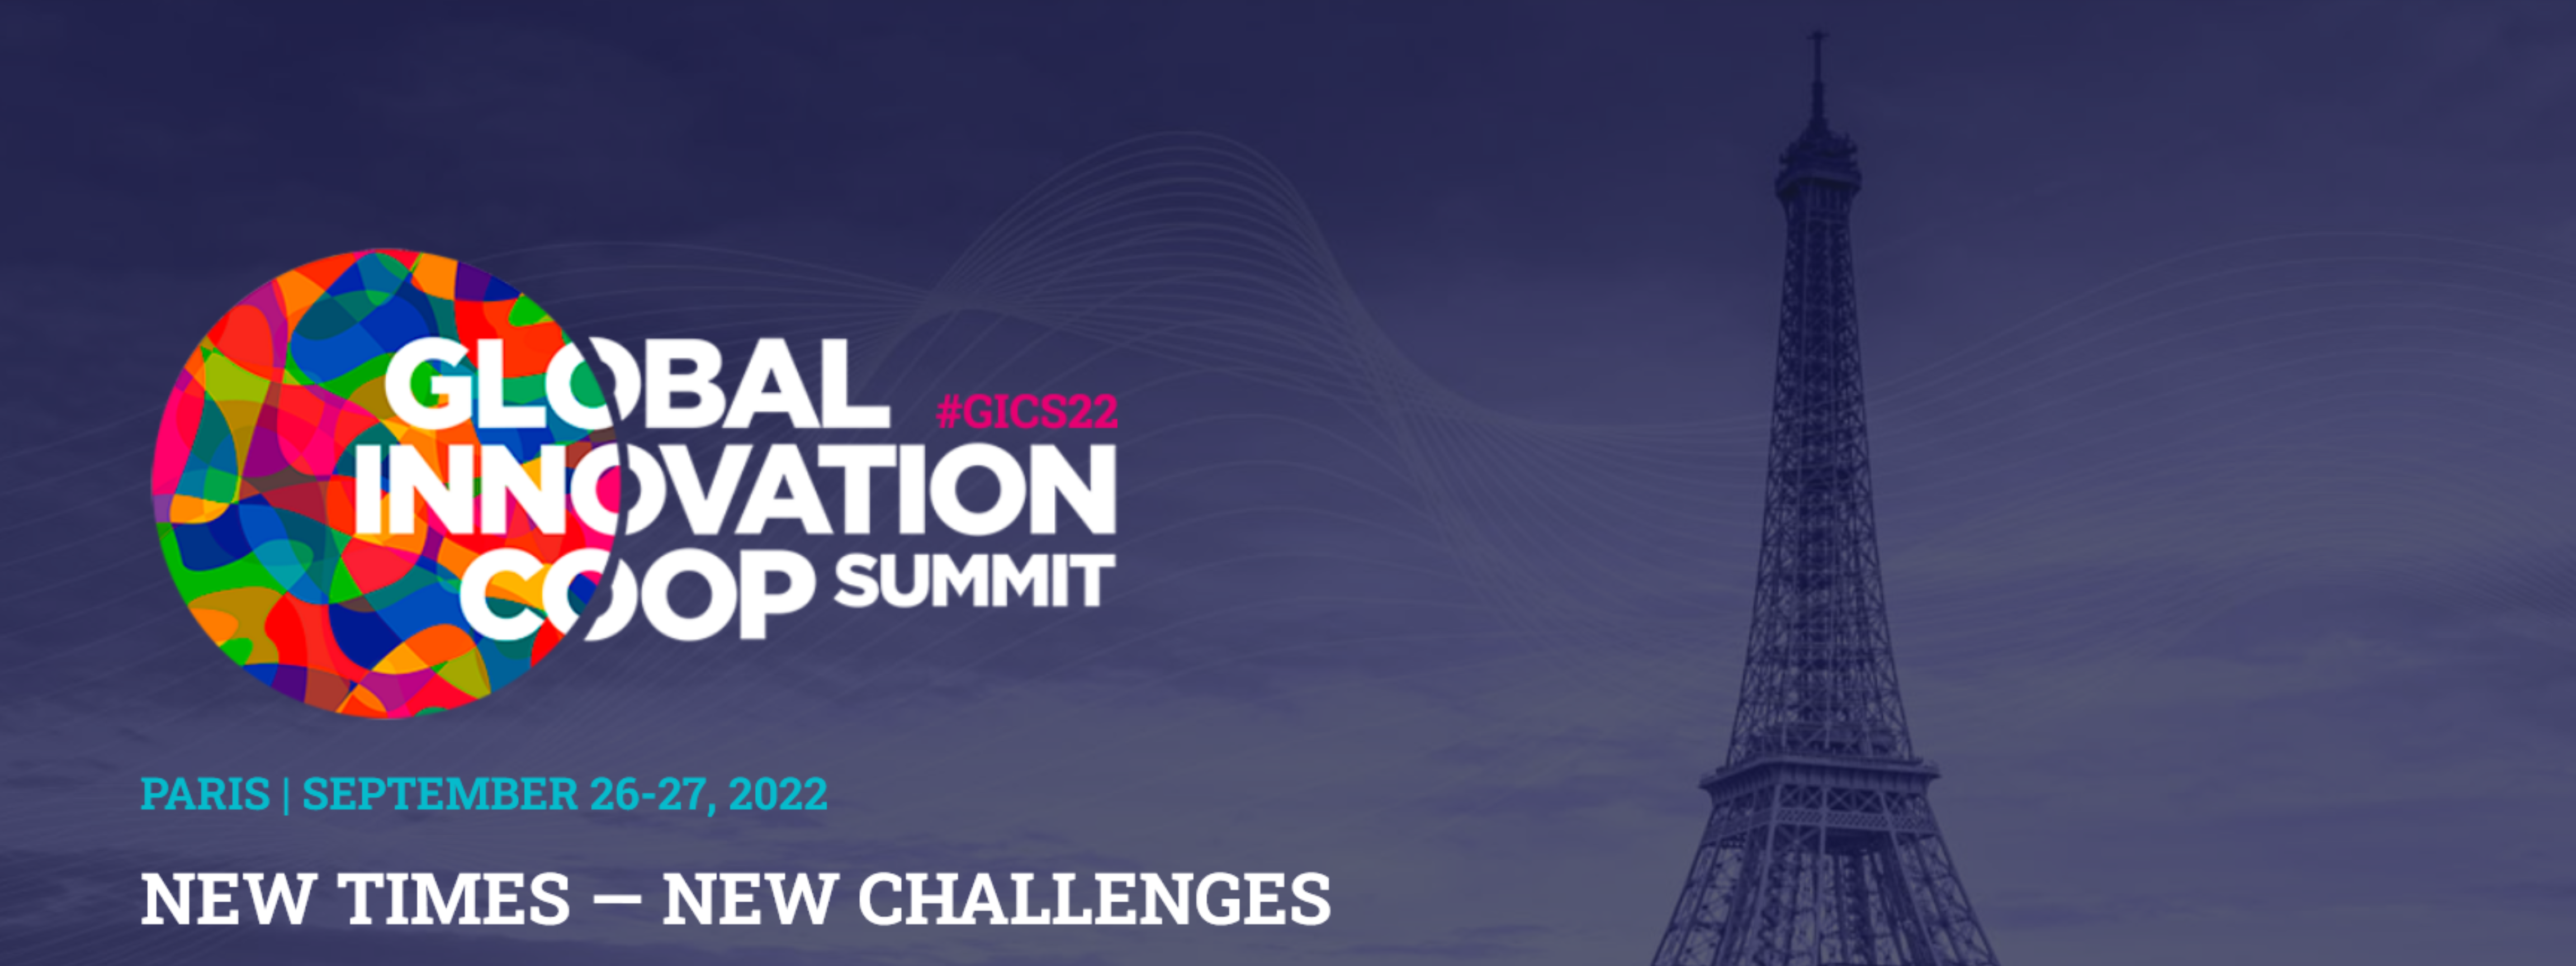 Global Innovation Coop Summit 